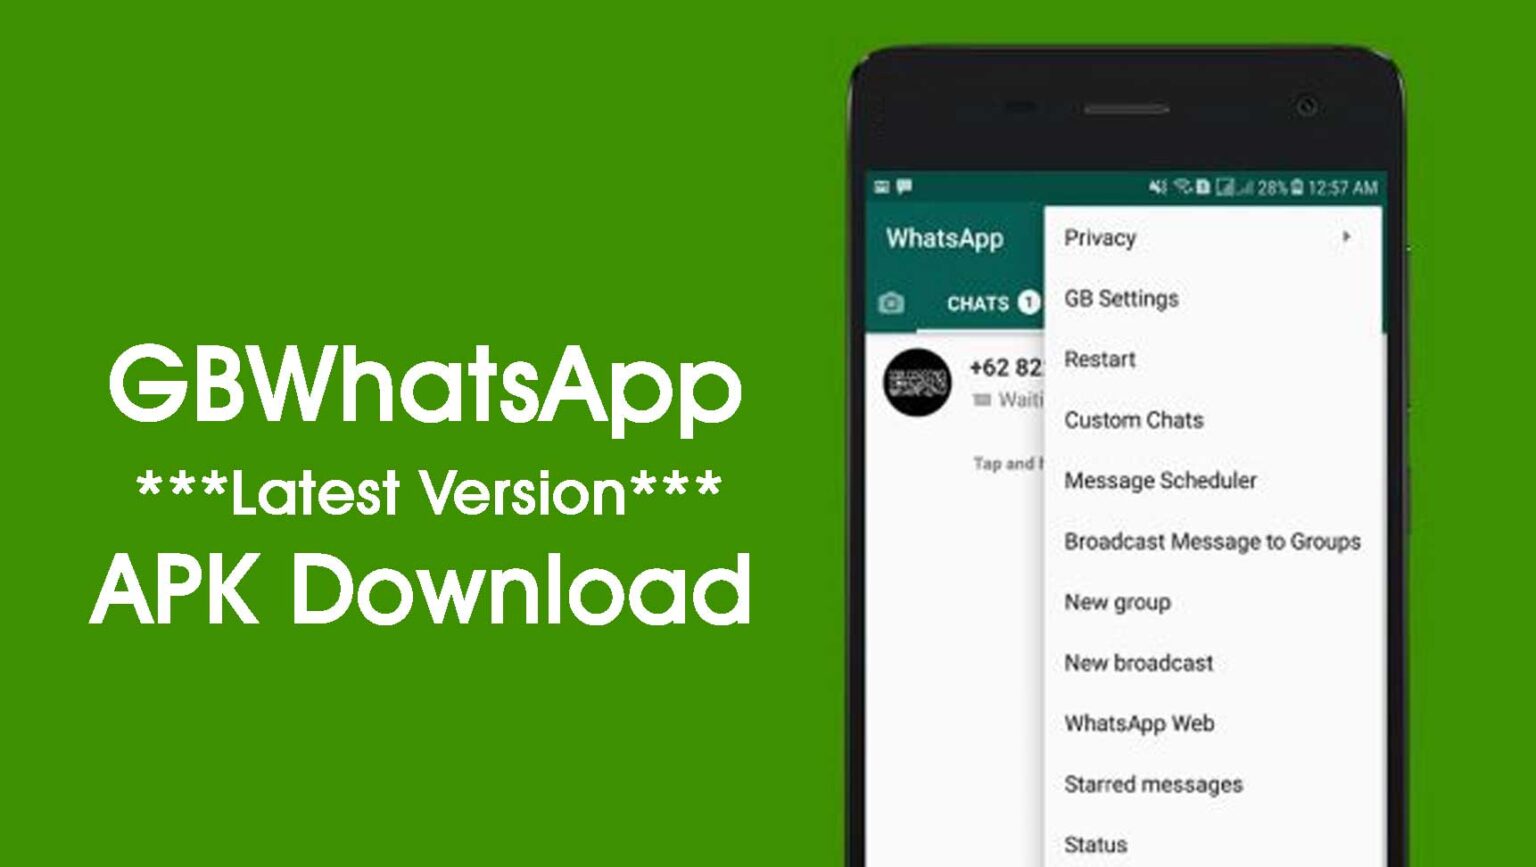 gb whatsapp version 4.4 2